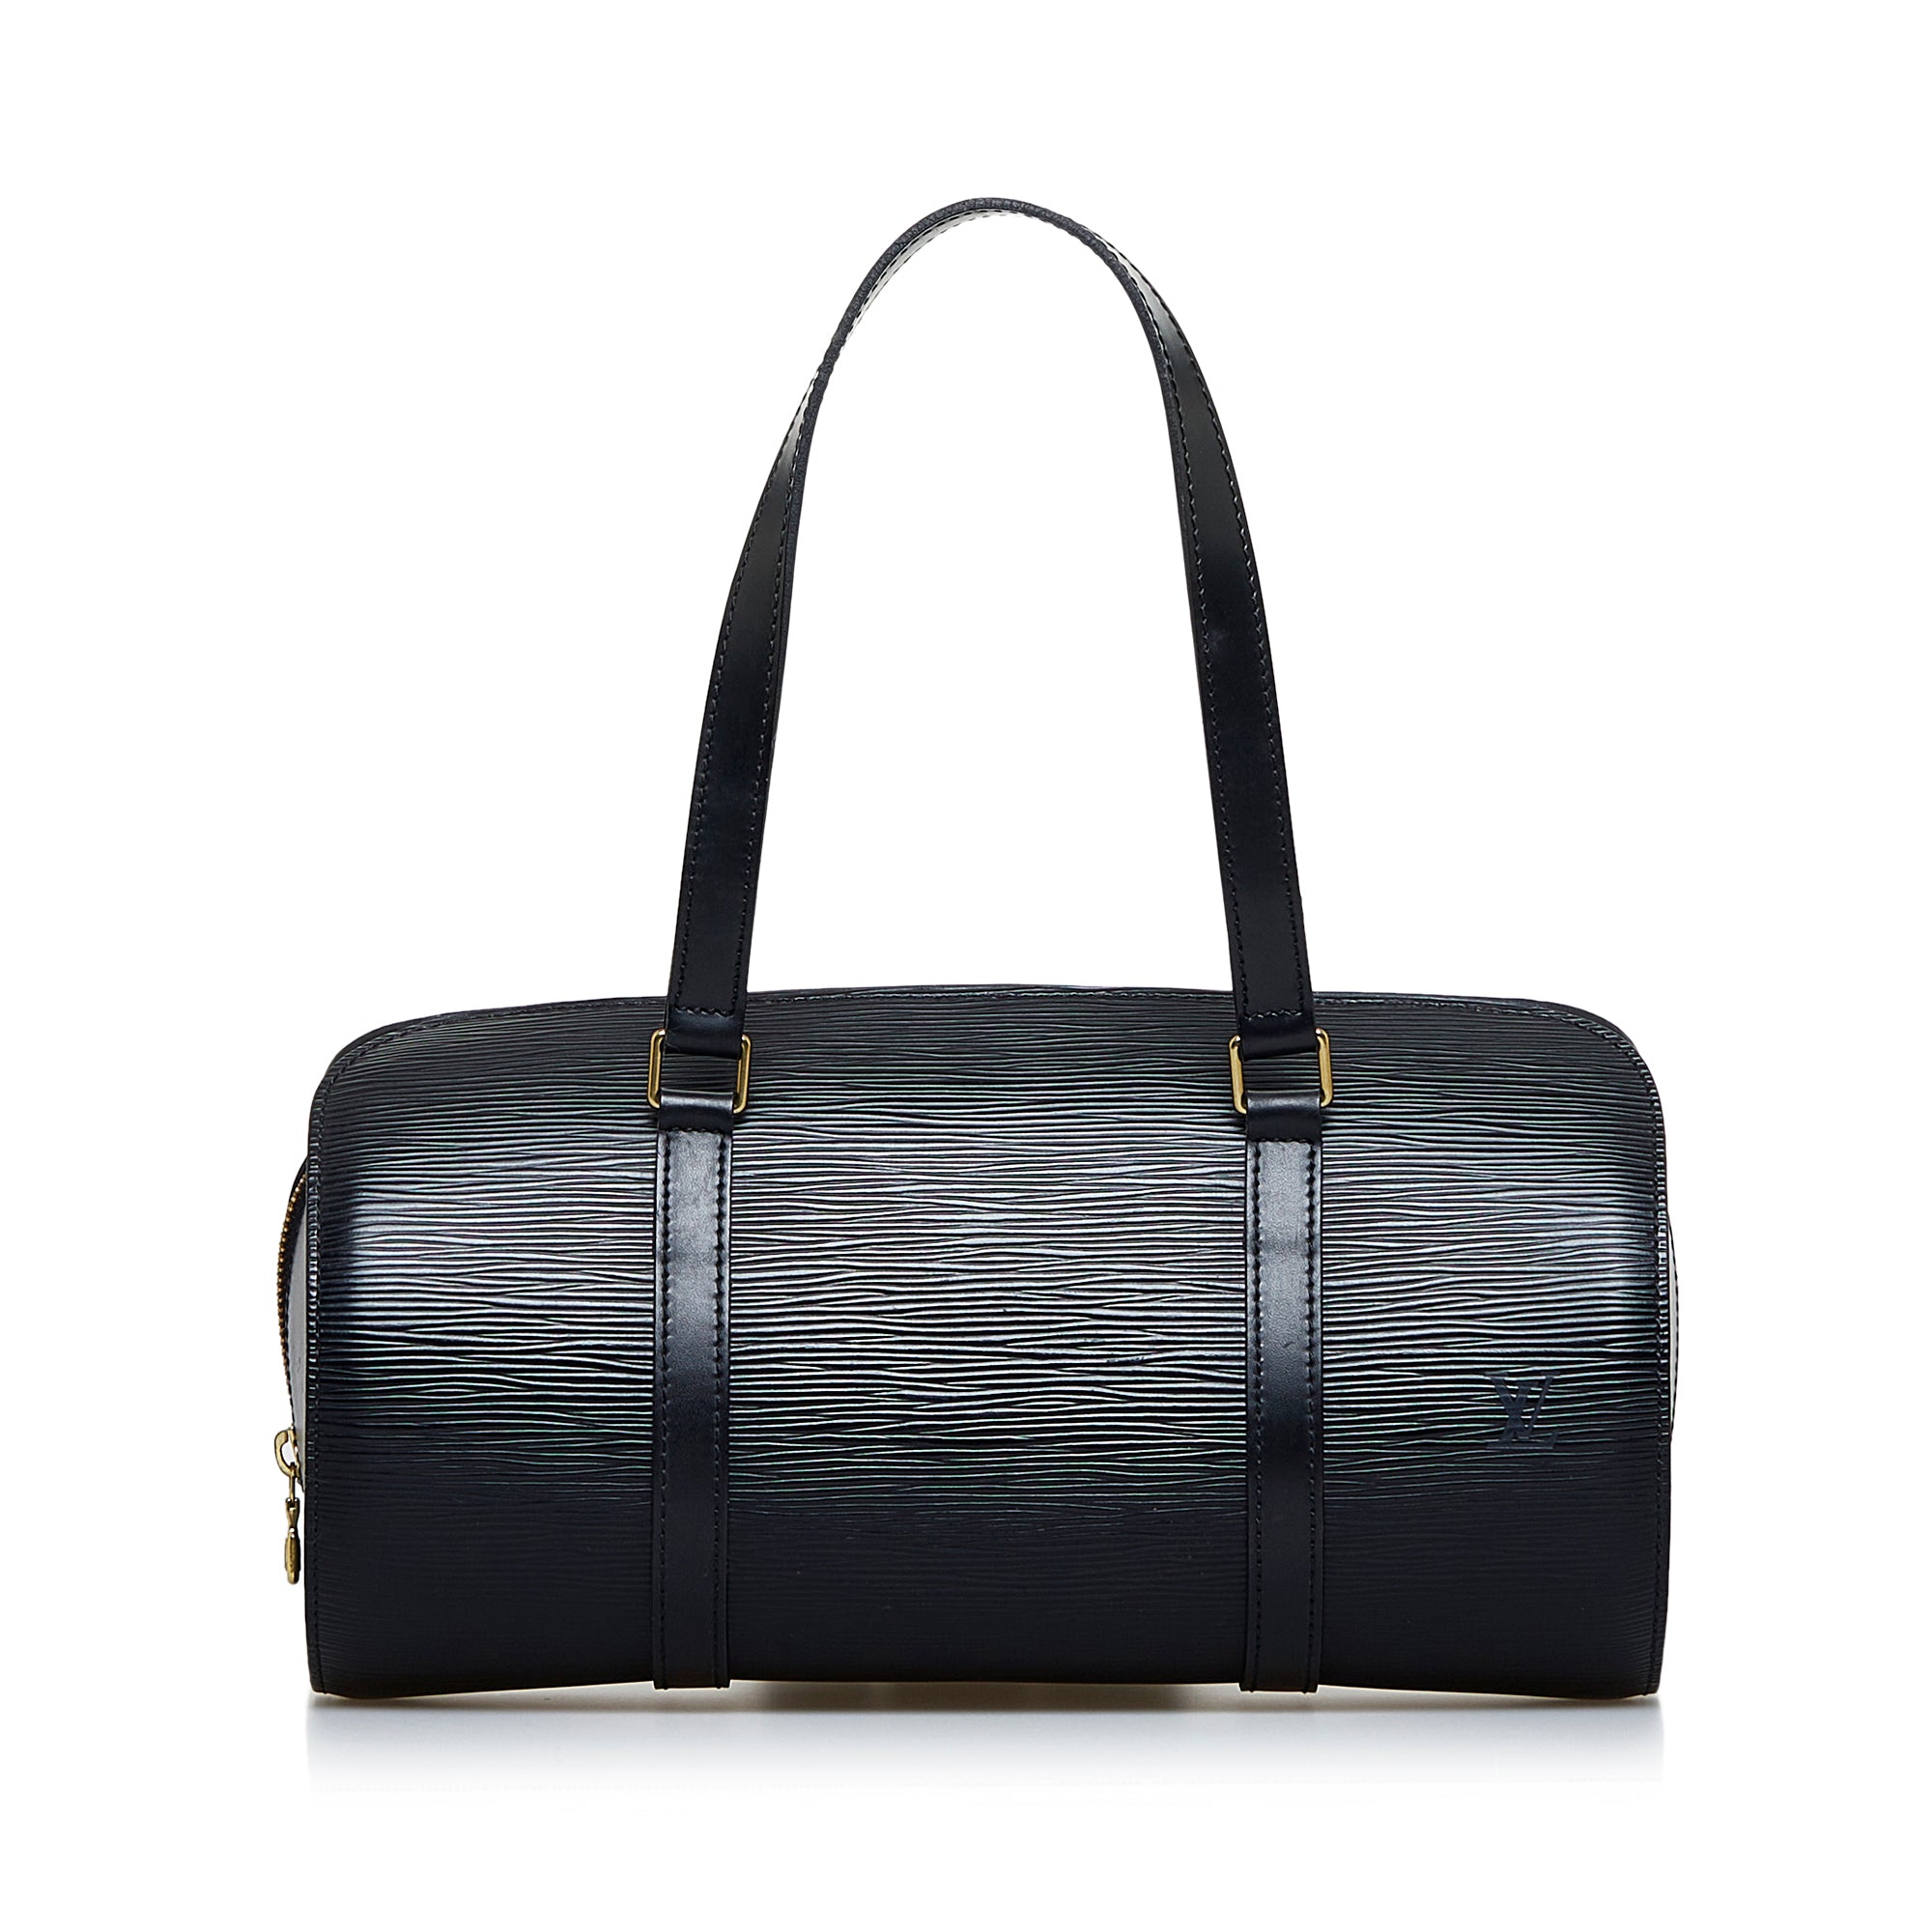 Soufflot leather handbag